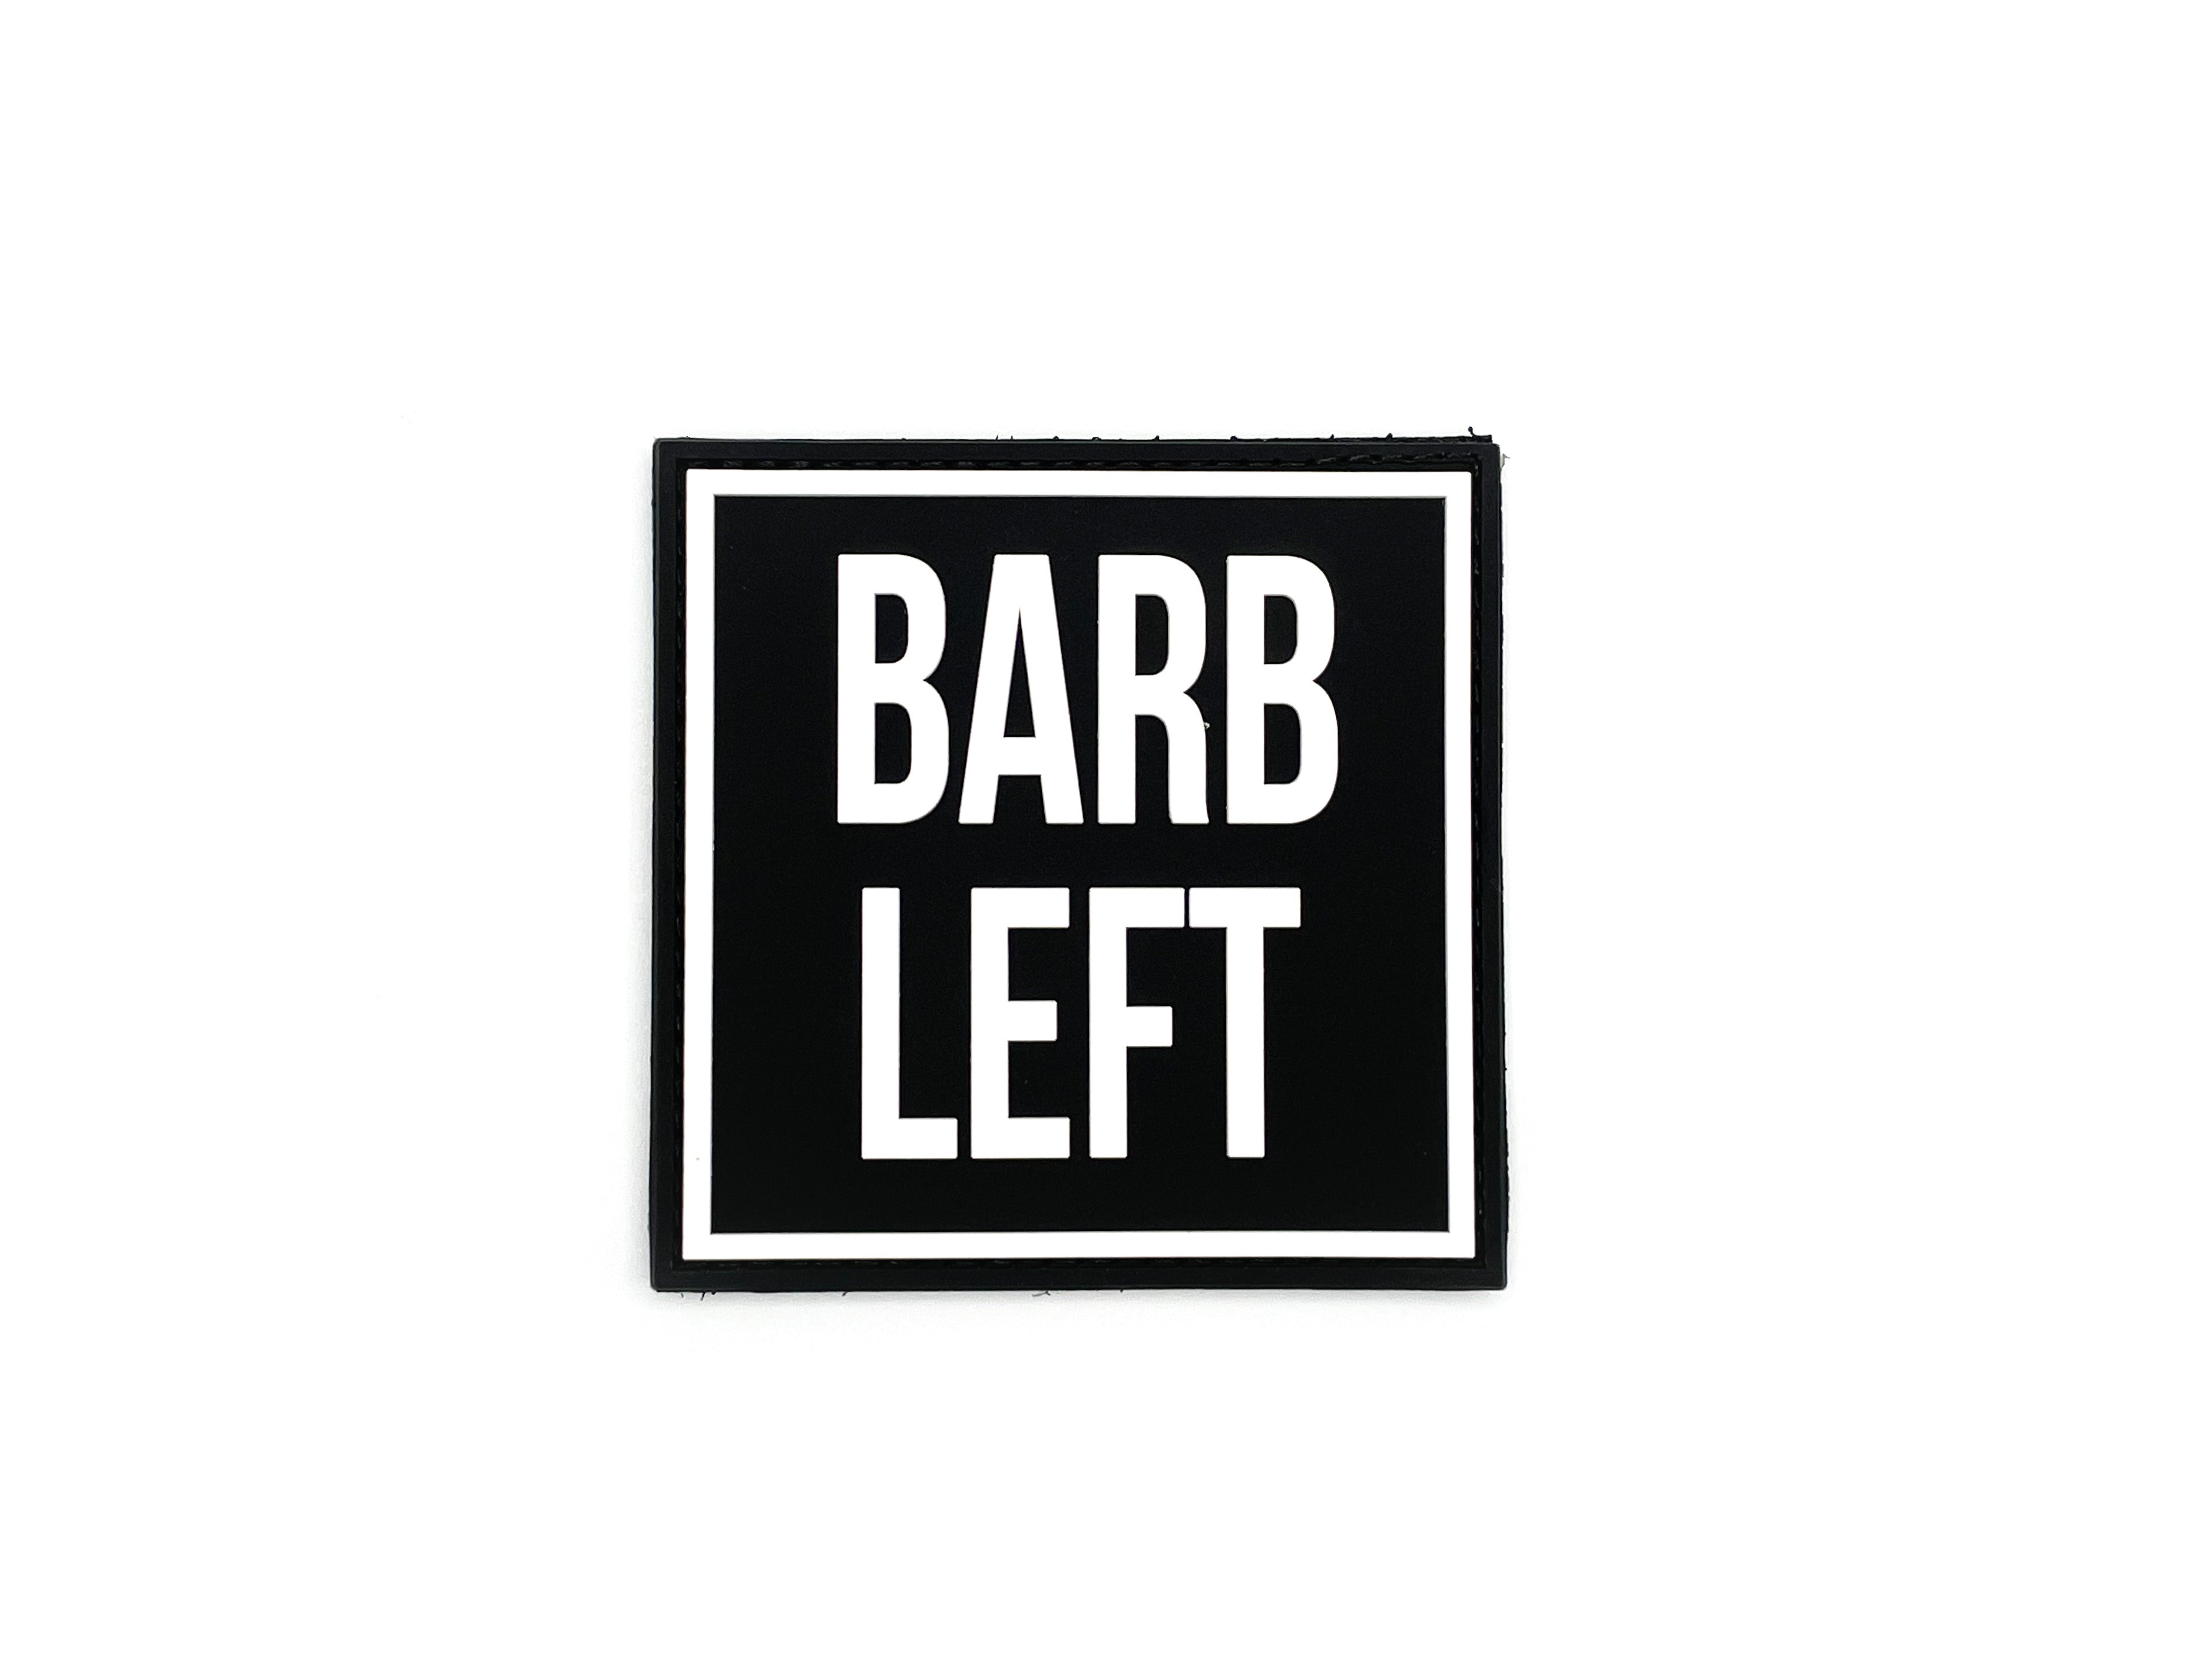 BARB LEFT